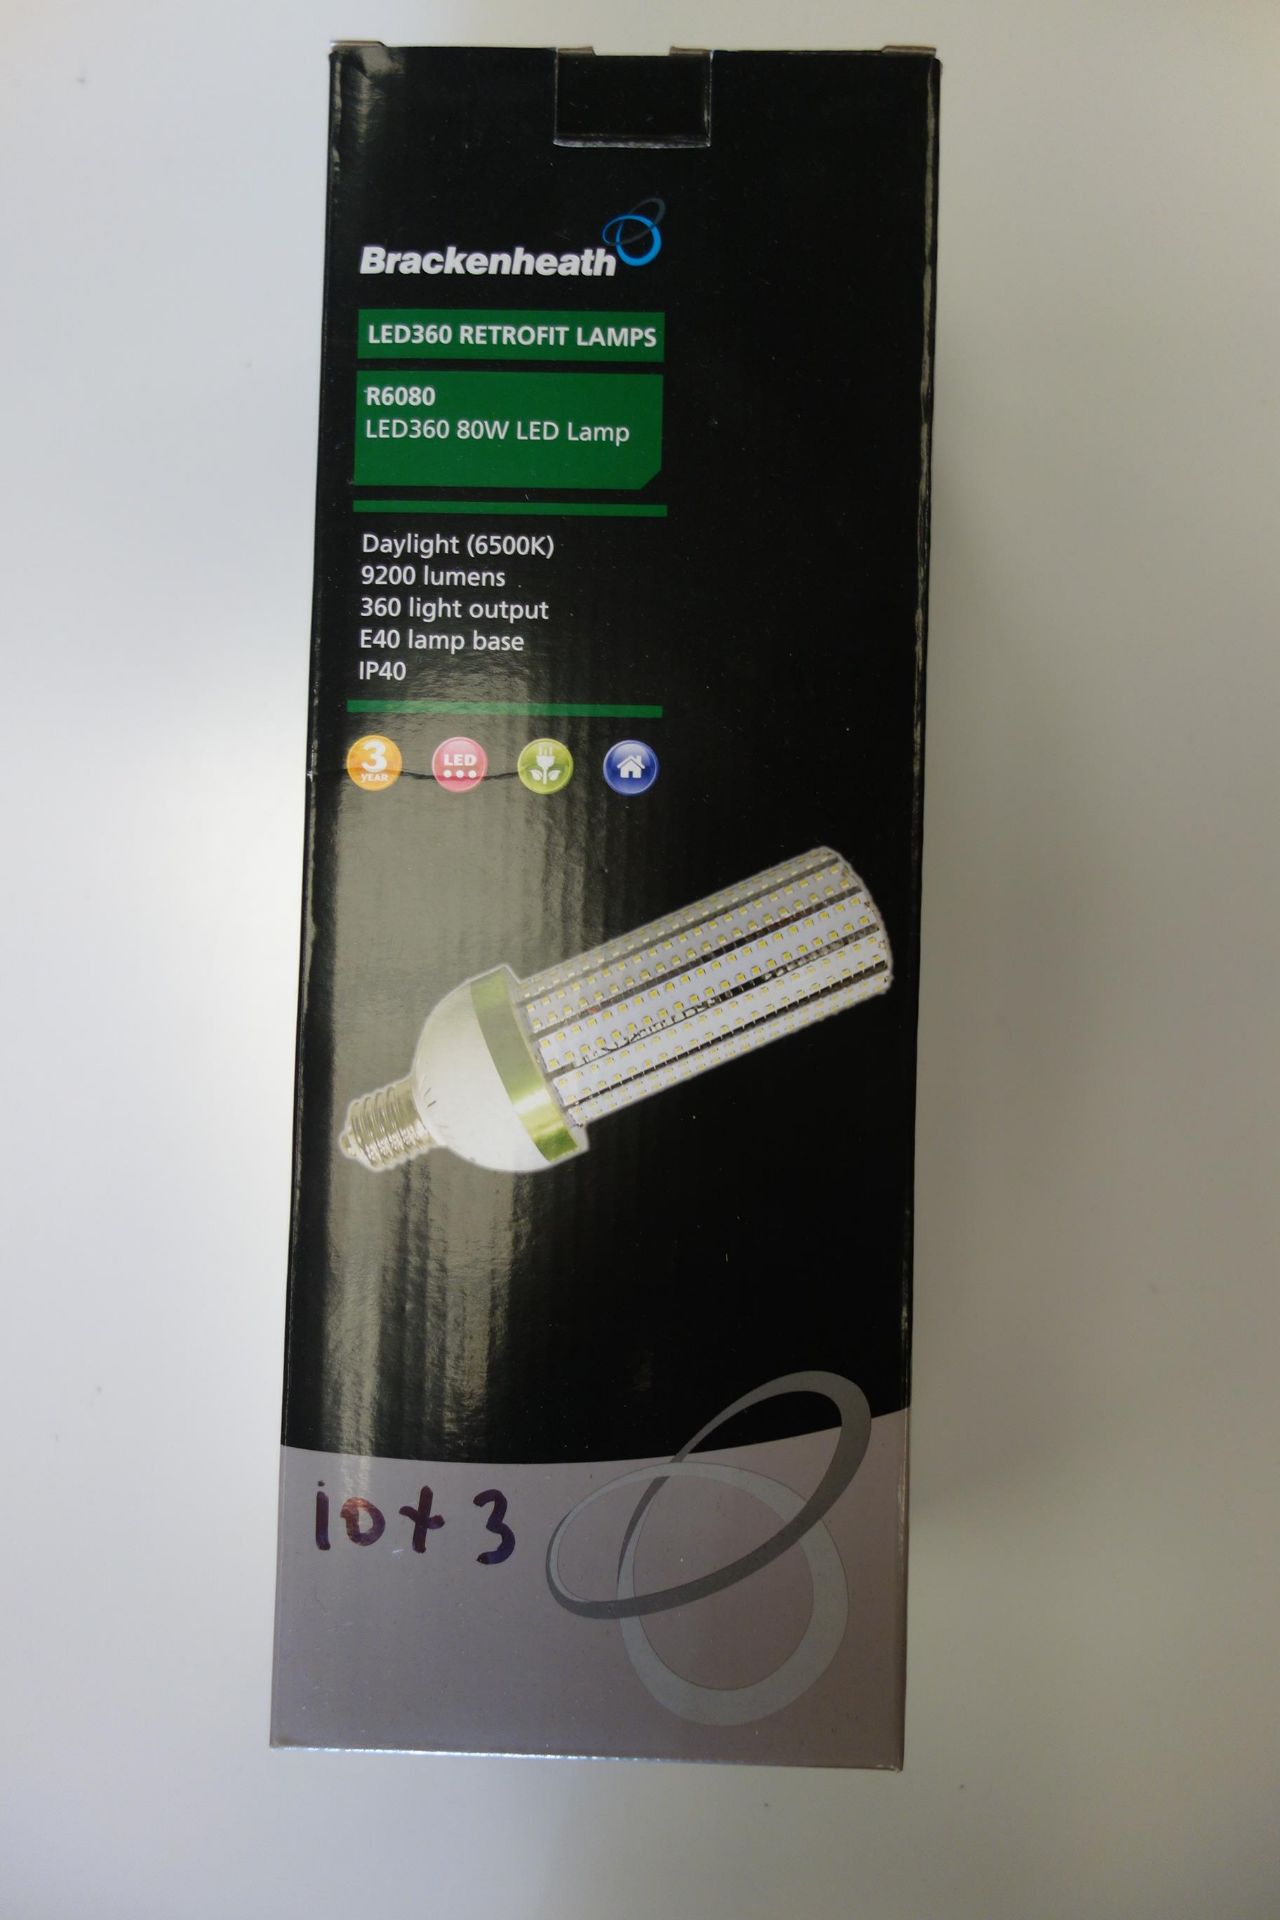 3 X Brakenheath R6080 LED 360 Retrofit Lamps 80W LED Daylight 6500K 9200 Lumen 360 Light Output